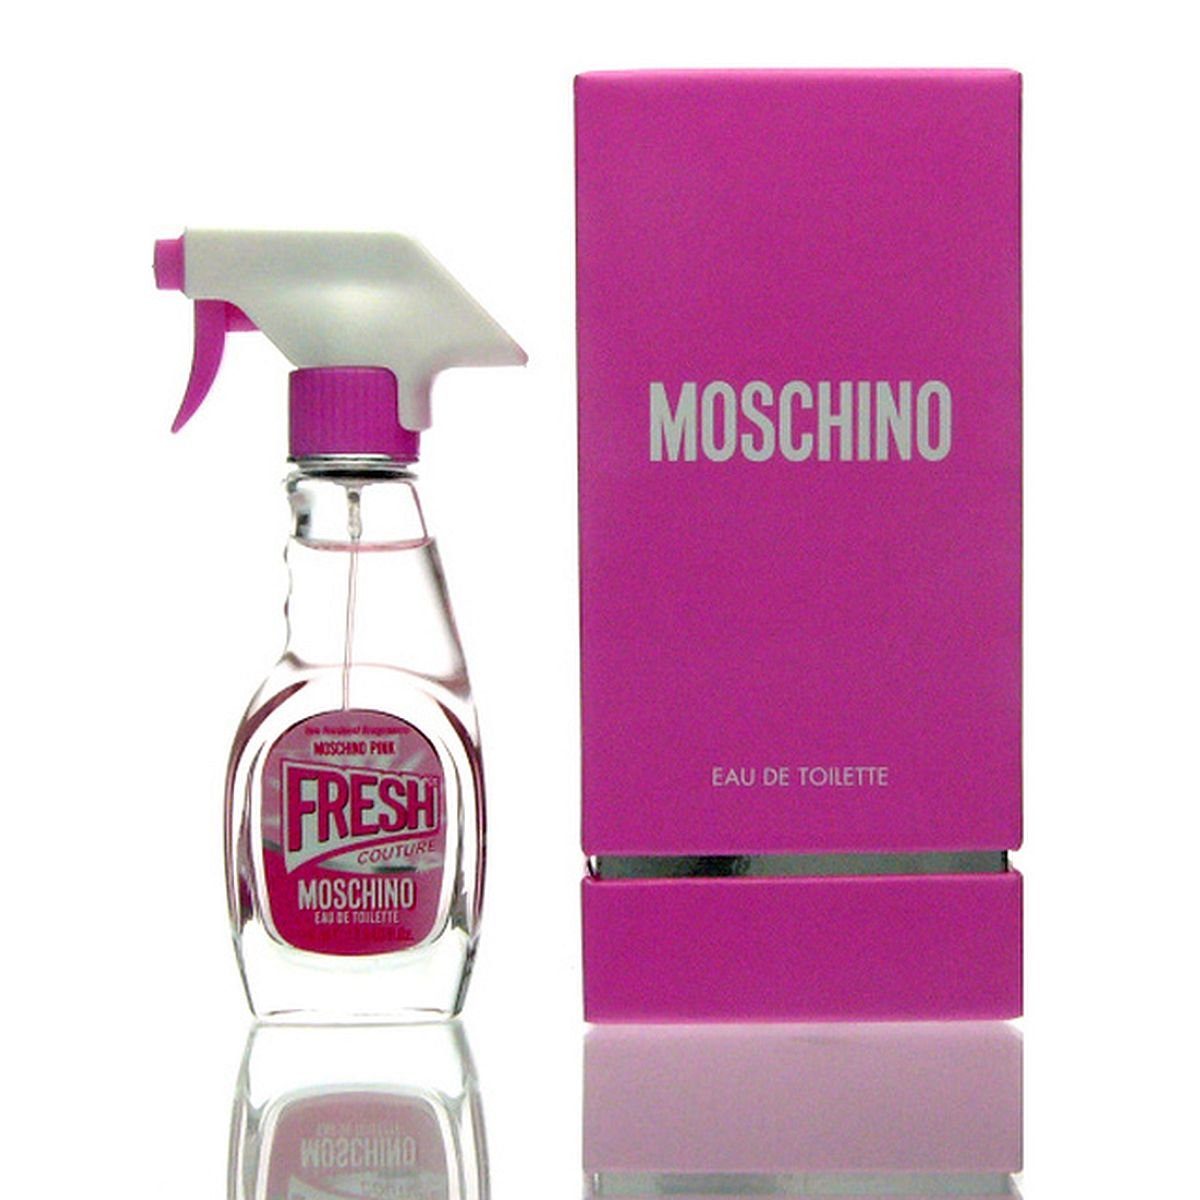 Moschino Eau de Toilette Moschino Pink Fresh Couture Eau de Toilette 100 ml | Eau de Toilette